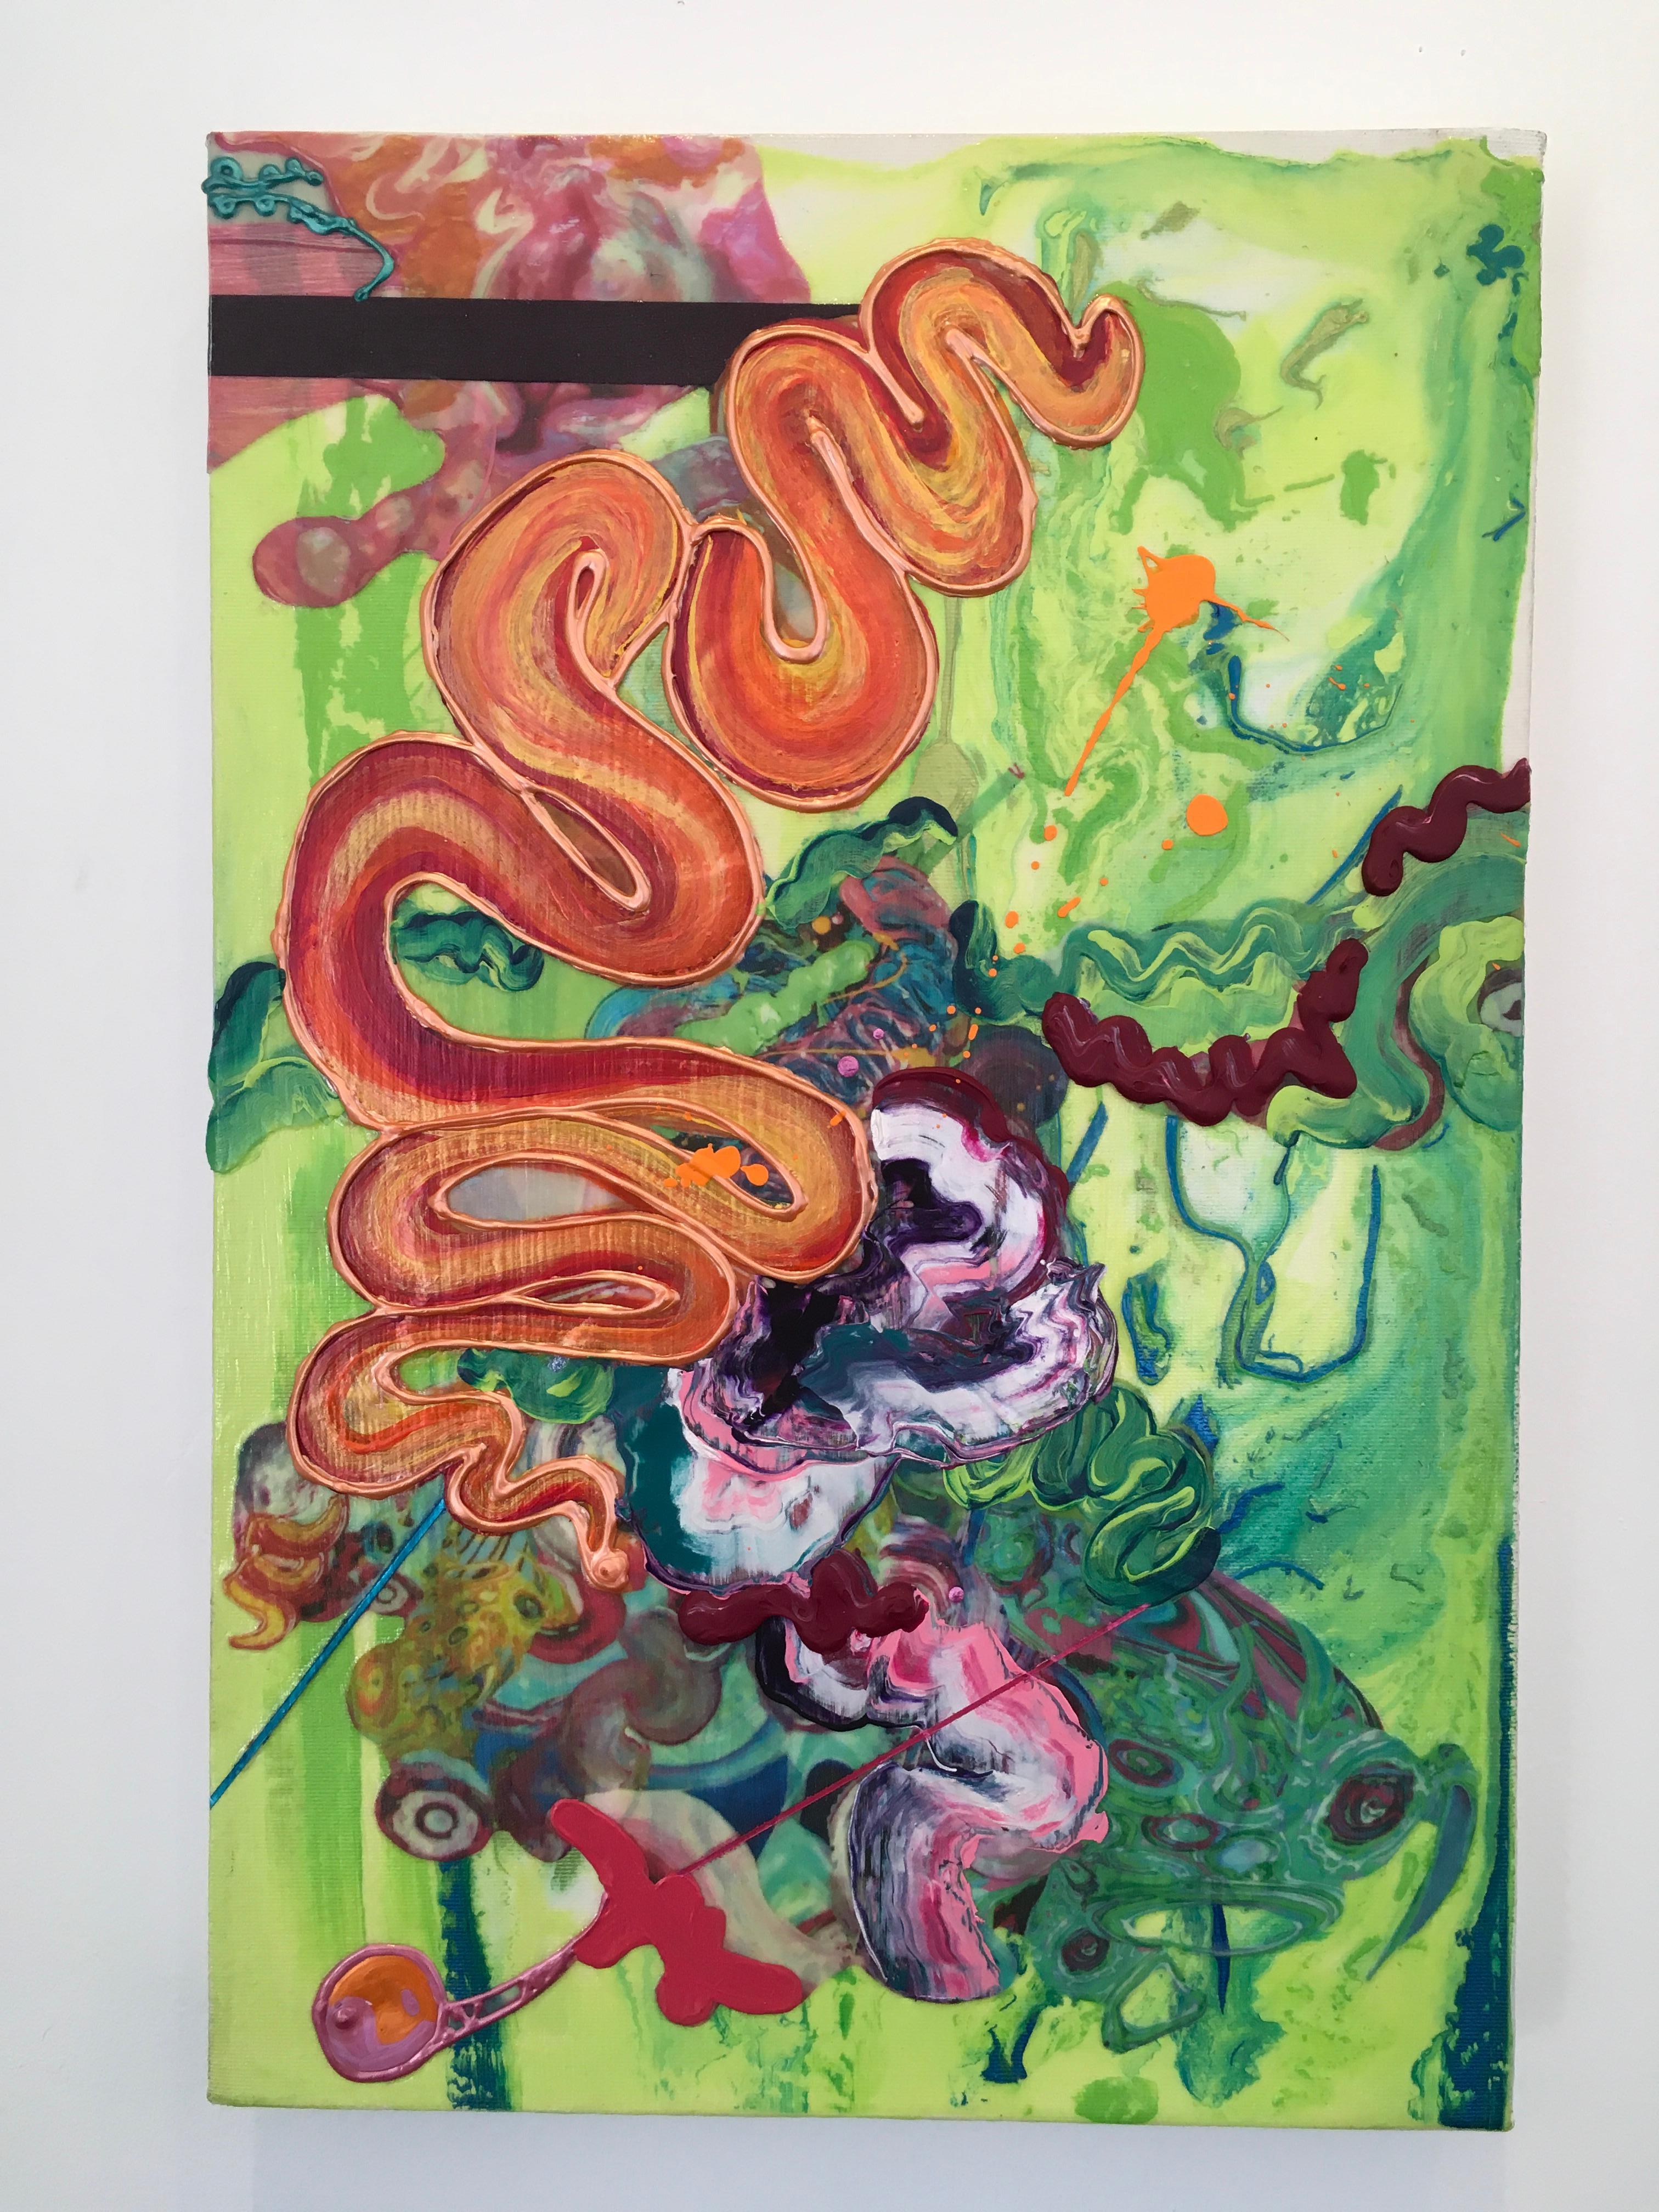 Liquid Landscape 0711, Mixed Media, Abstrakt, farbenfroh, hell, dimensional – Mixed Media Art von Kimber Berry